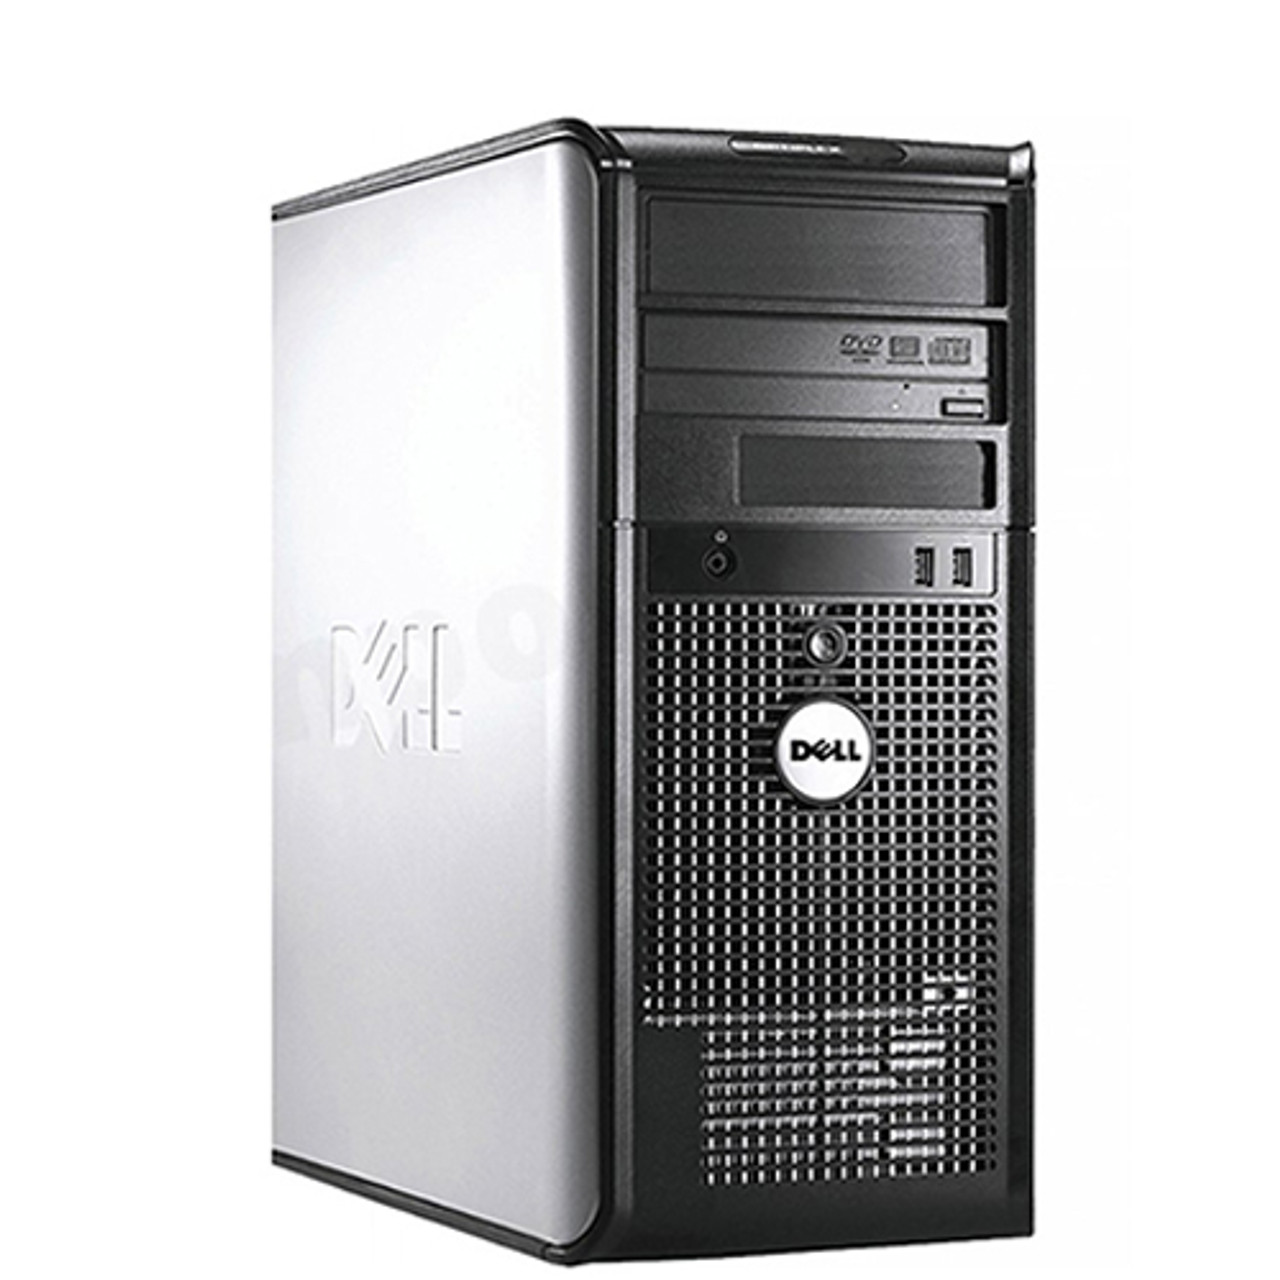 Dell Optiplex 780 Desktop Computer Tower Pc C2d 2 93ghz 4gb 250gb Windows 10